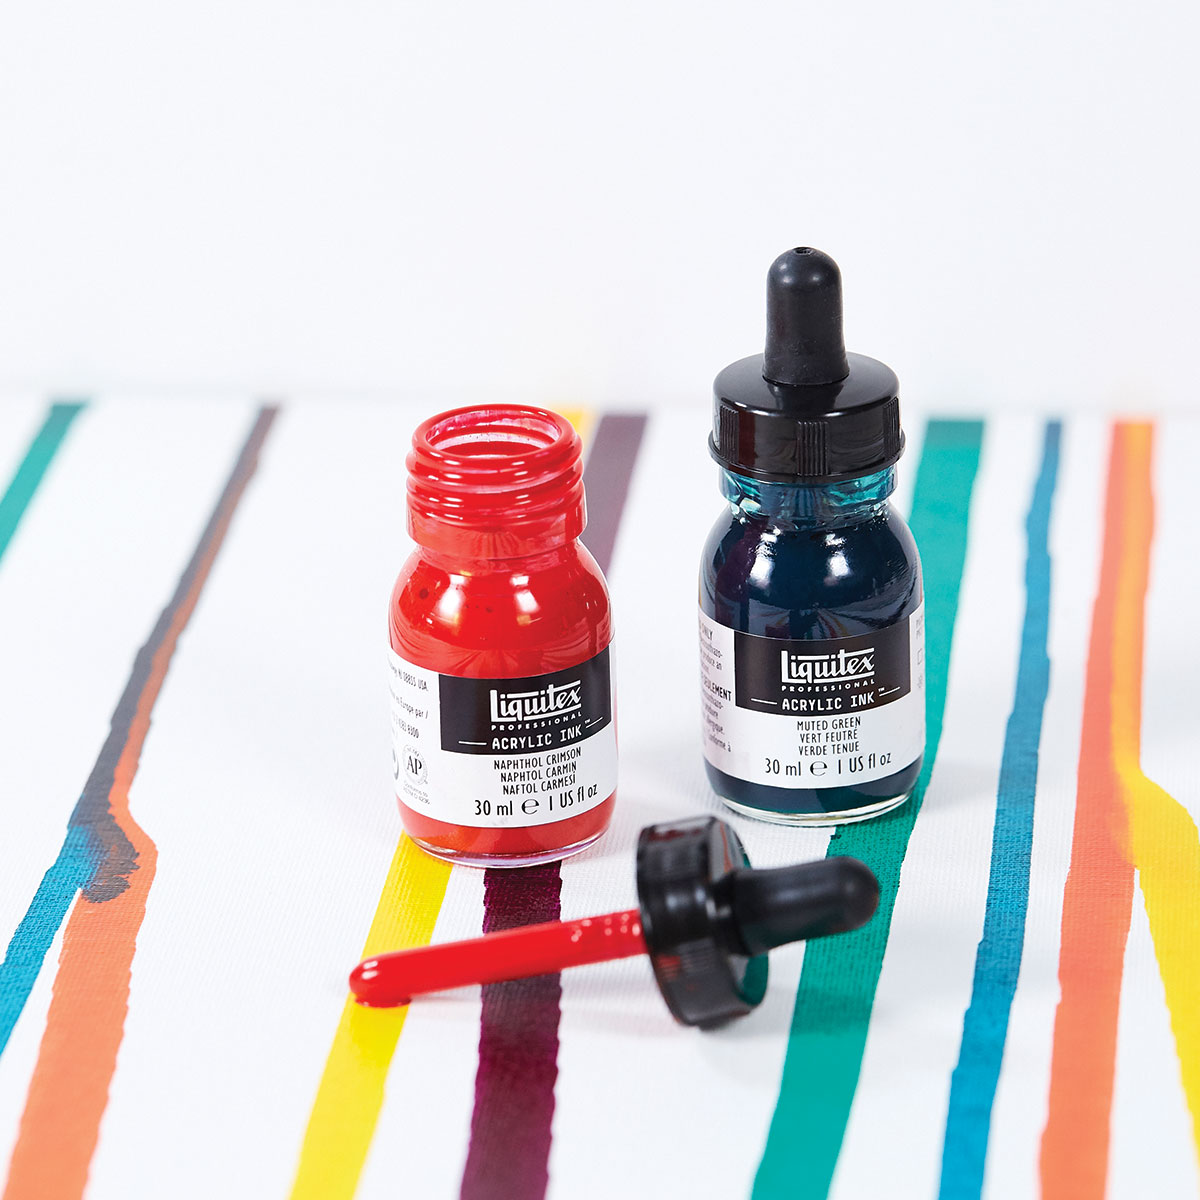 Liquidraw Acrylic Inks for Artists Set of 10 Ink Set 35Ml